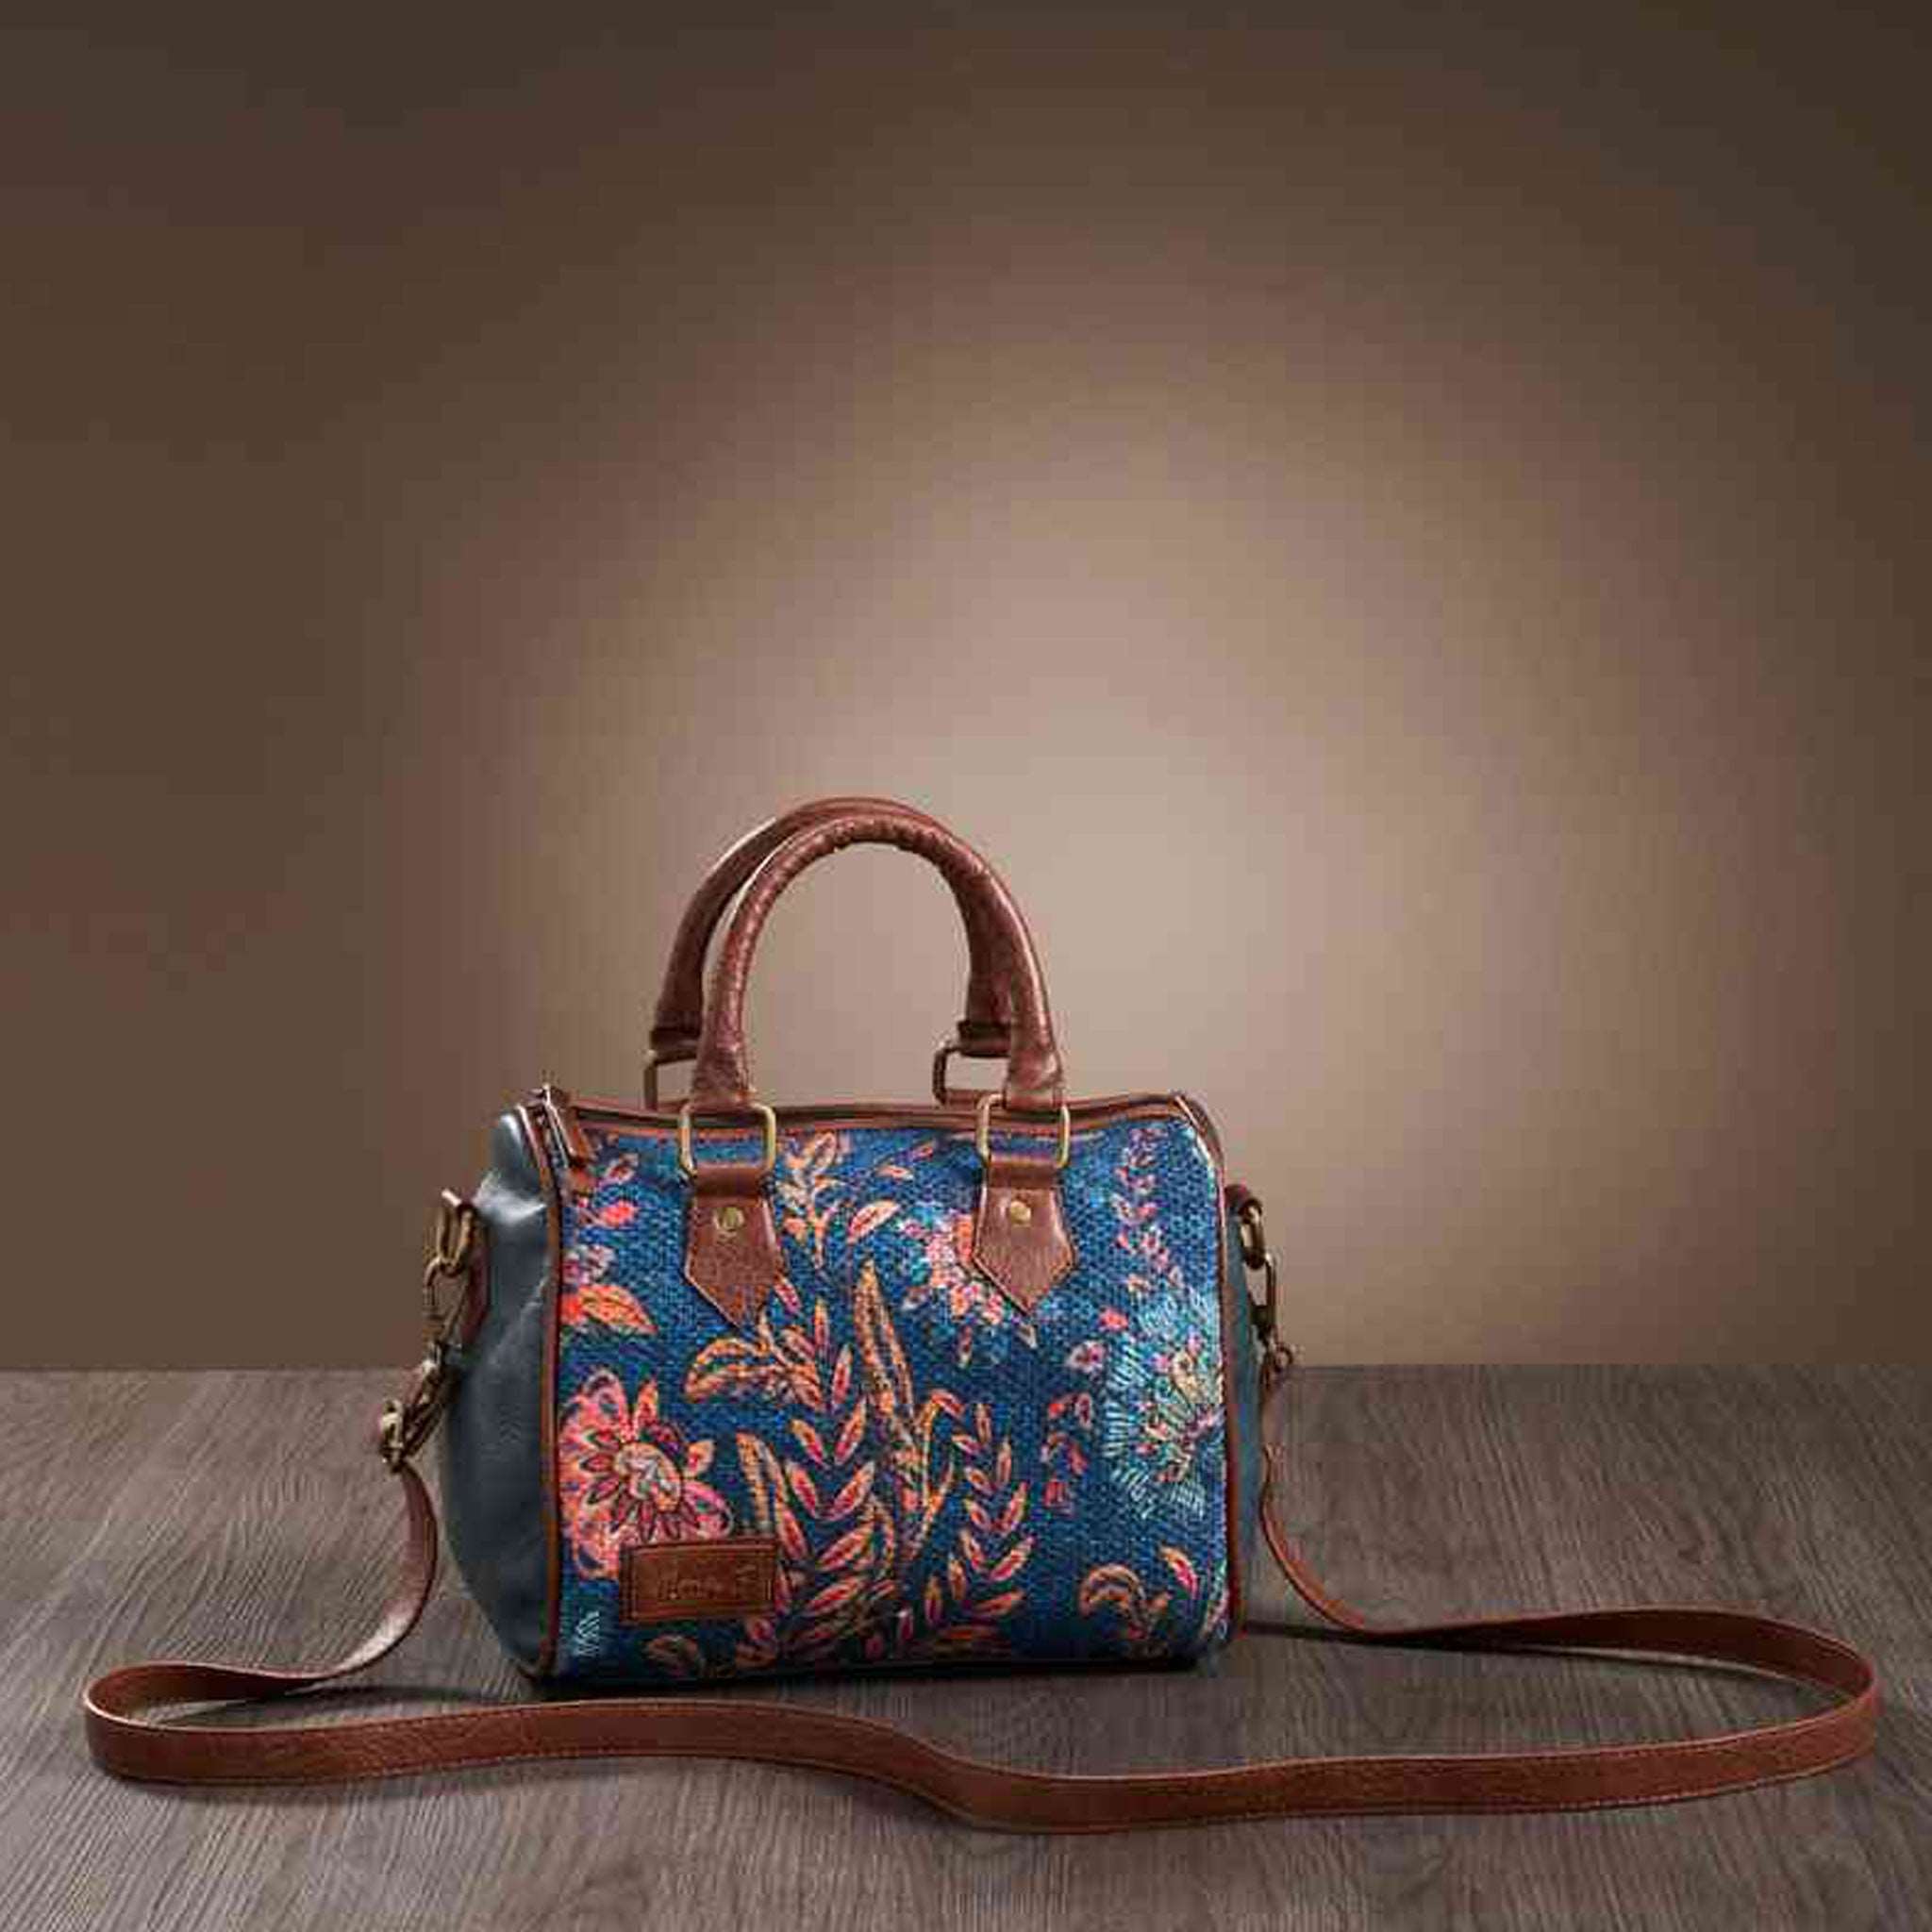 Mona B Canvas Small Vintage Handbag, Shoulder Bag, Crossbody Bag For Shopping, Travel With Stylish Design For Women (Blue, Kilim) - M-7004 - Handbag by Mona-B - Backpack, Flash Sale, Flat40, Sale, Shop2999, Shop3999